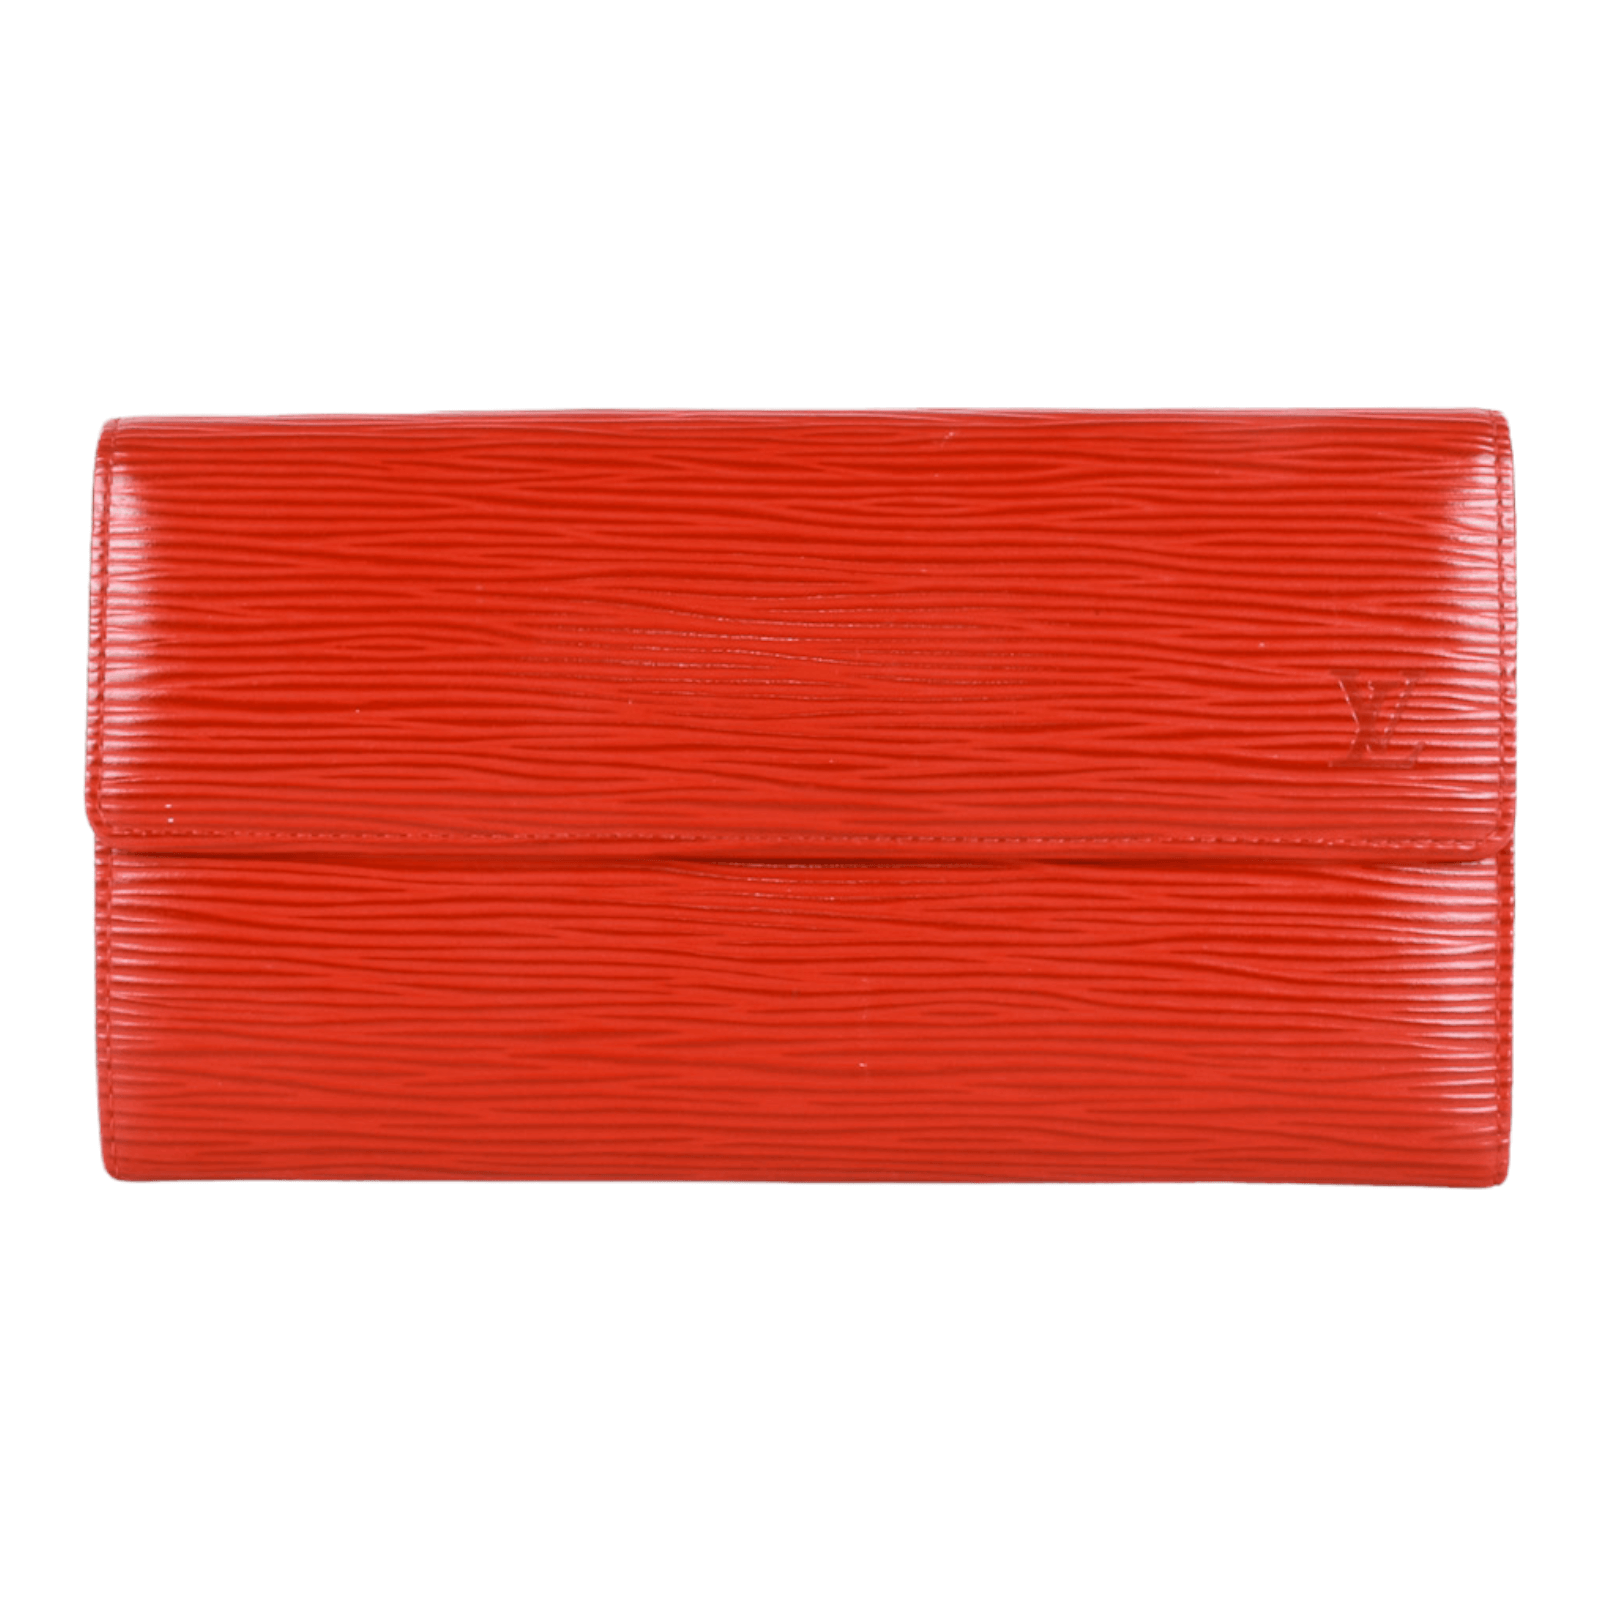 Authentic Louis Vuitton Epi leather Sarah Wallet Red